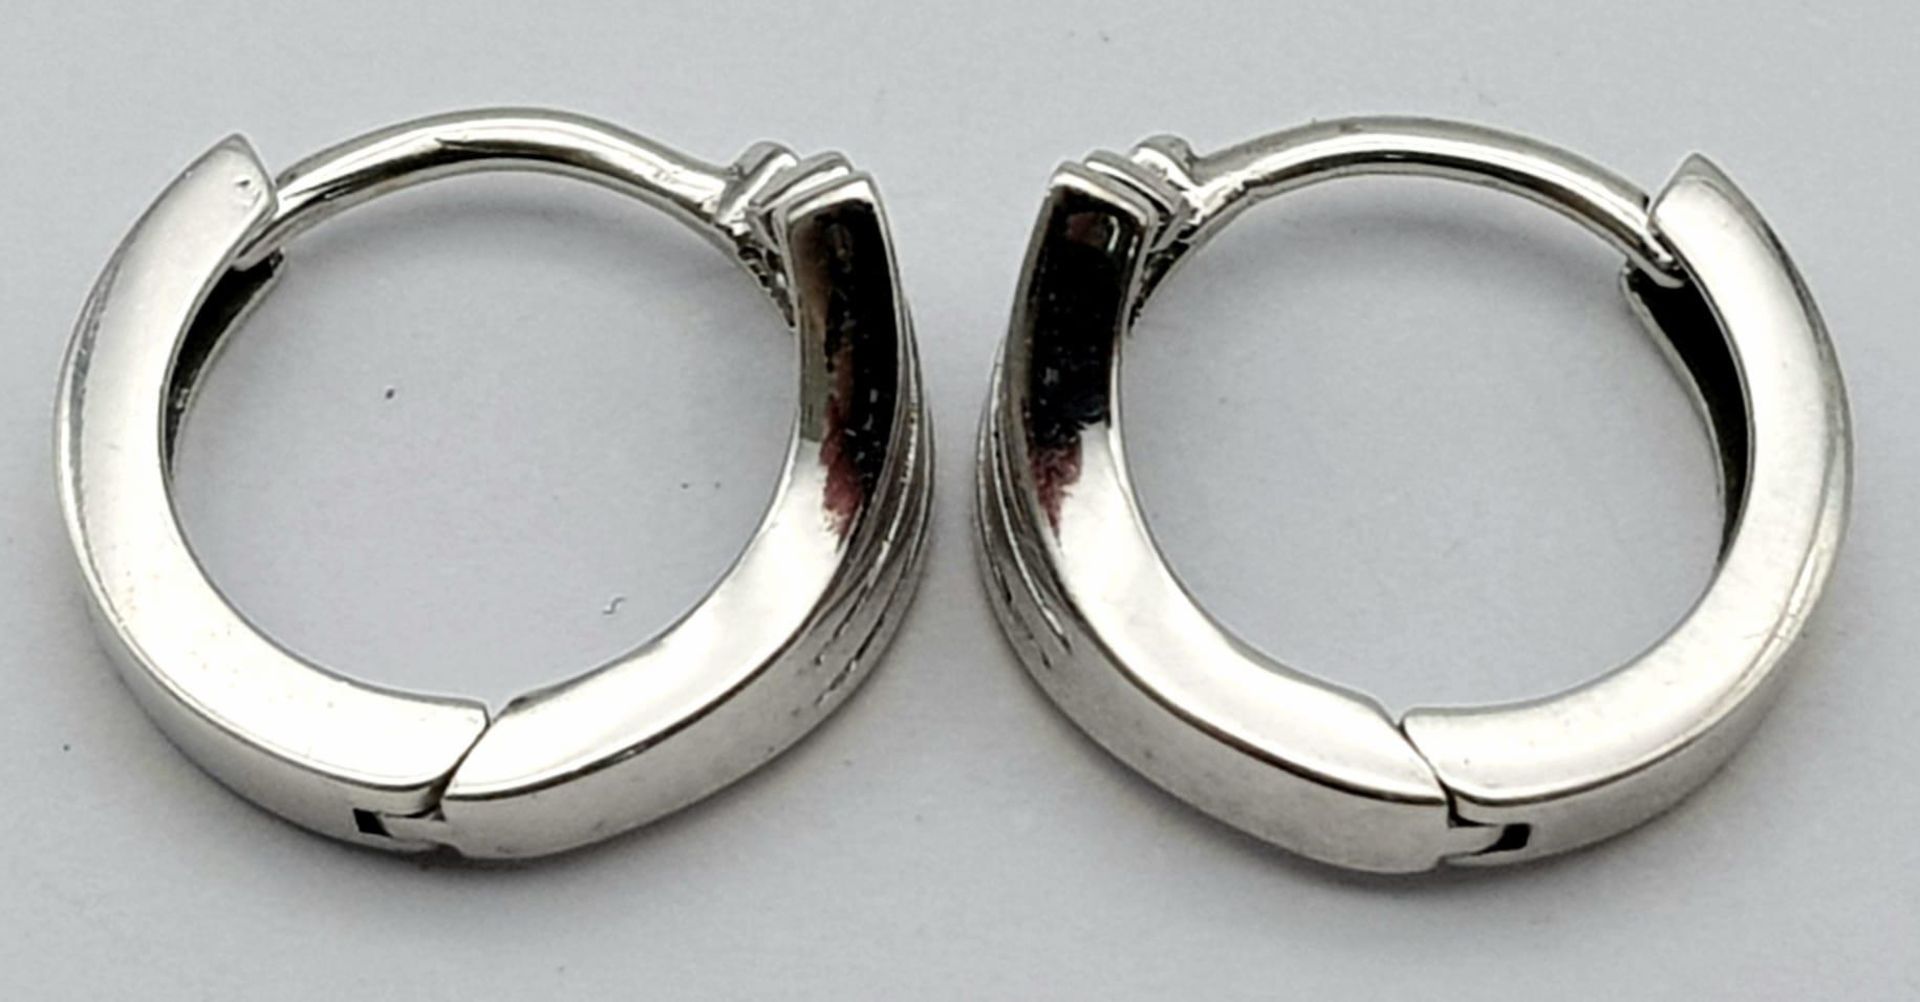 Pair of 18K White Gold CZ Mini Hoops earrings, 3.1g total weight - Bild 4 aus 6